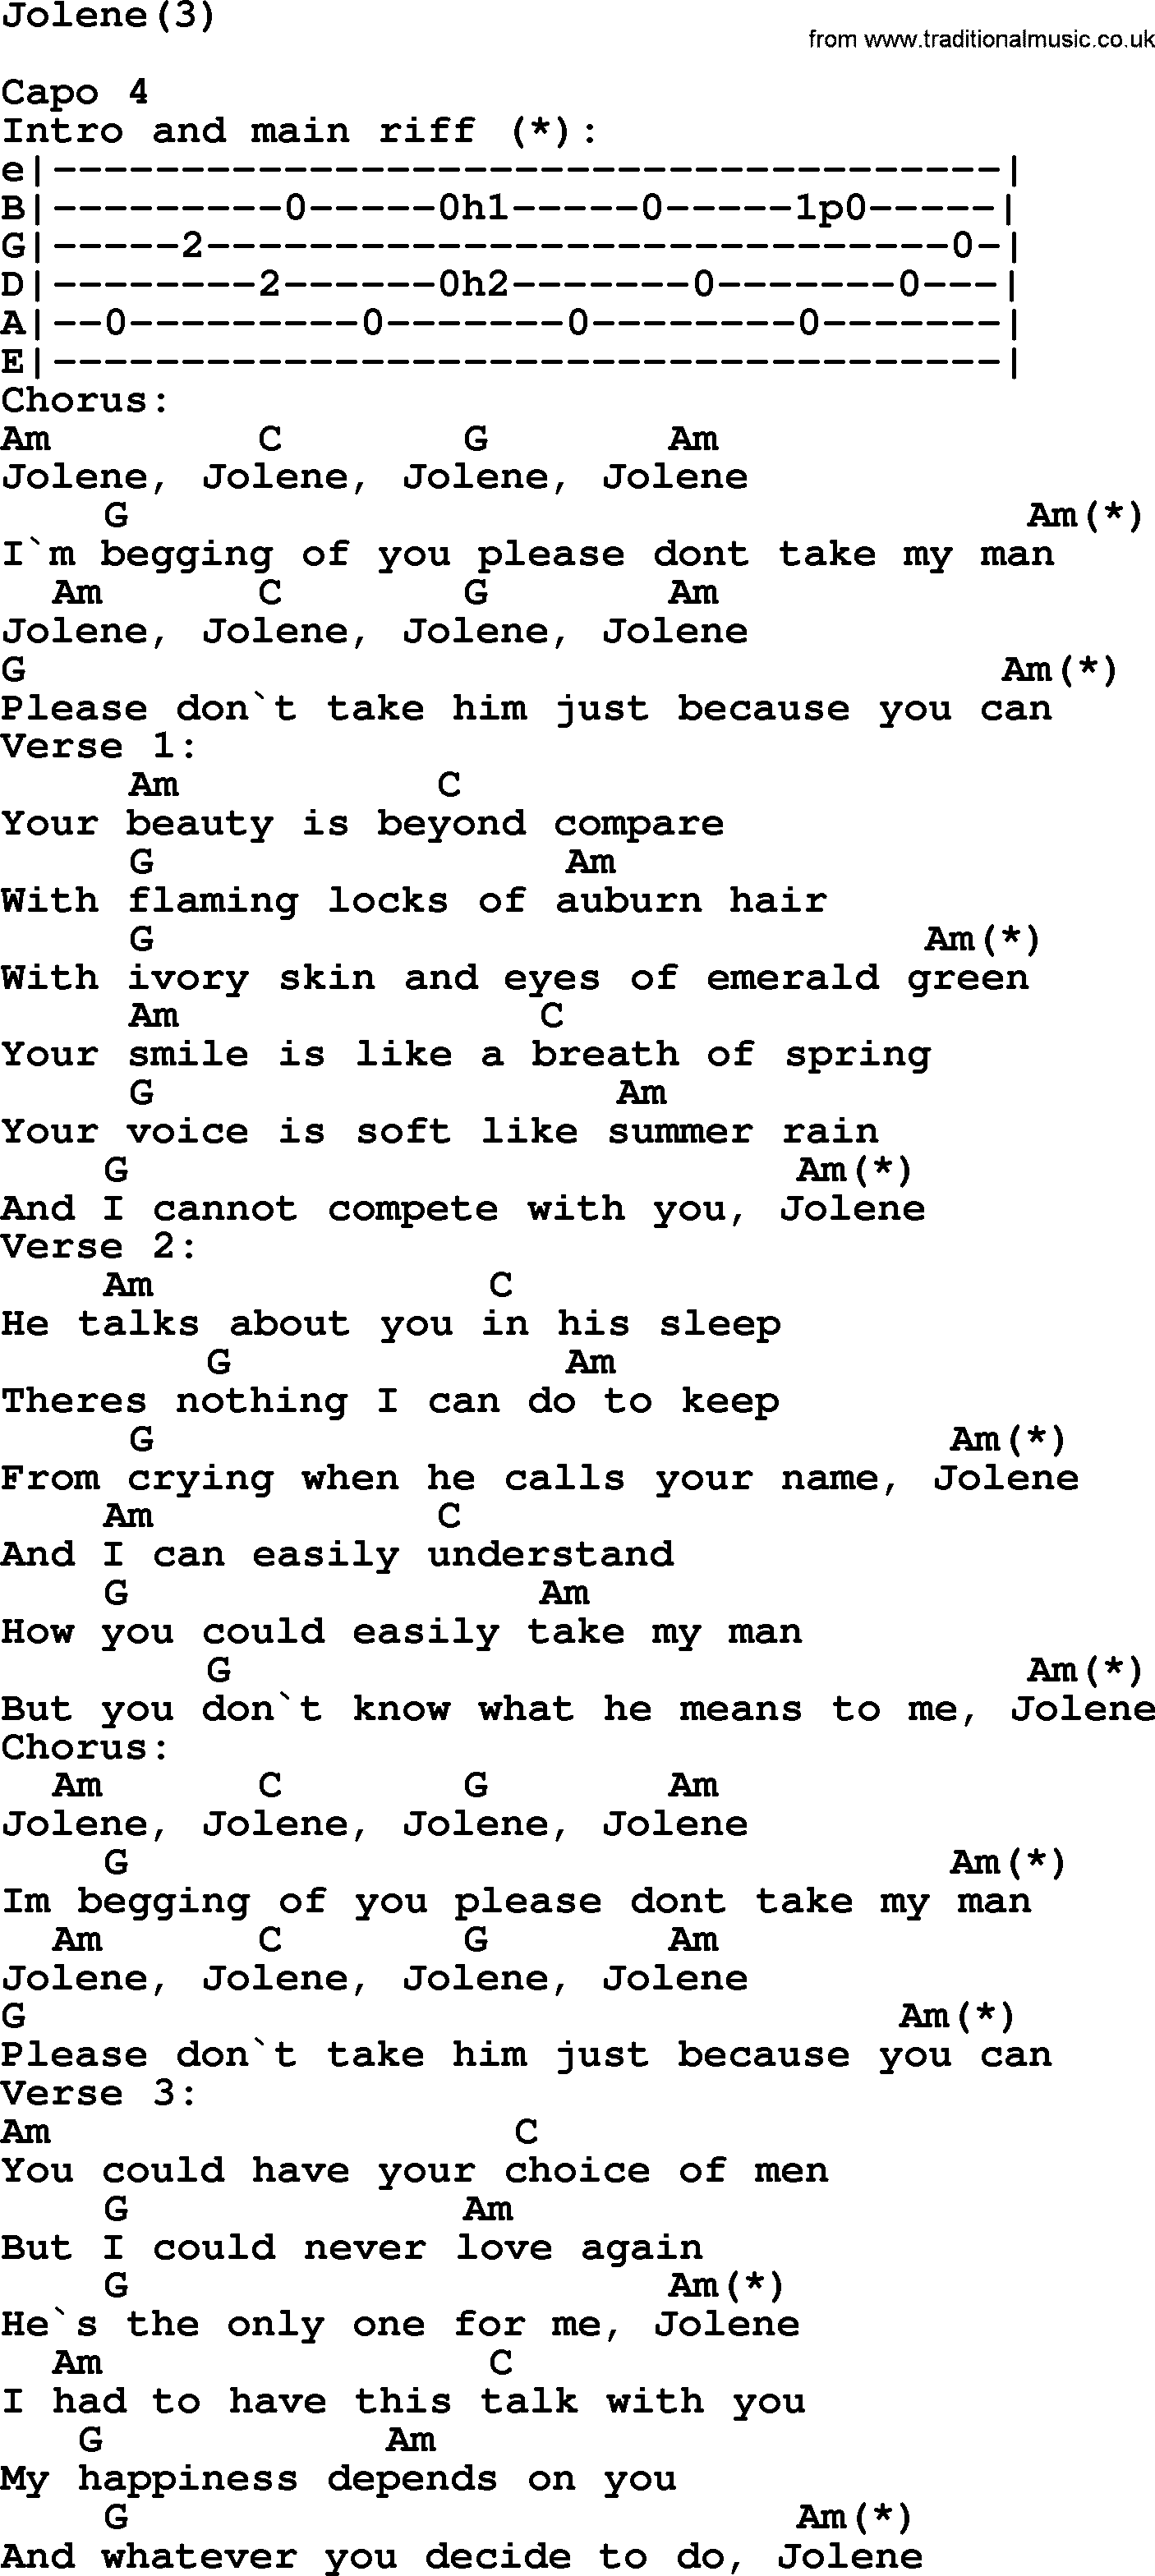 Dolly Parton song Jolene(3), lyrics and chords